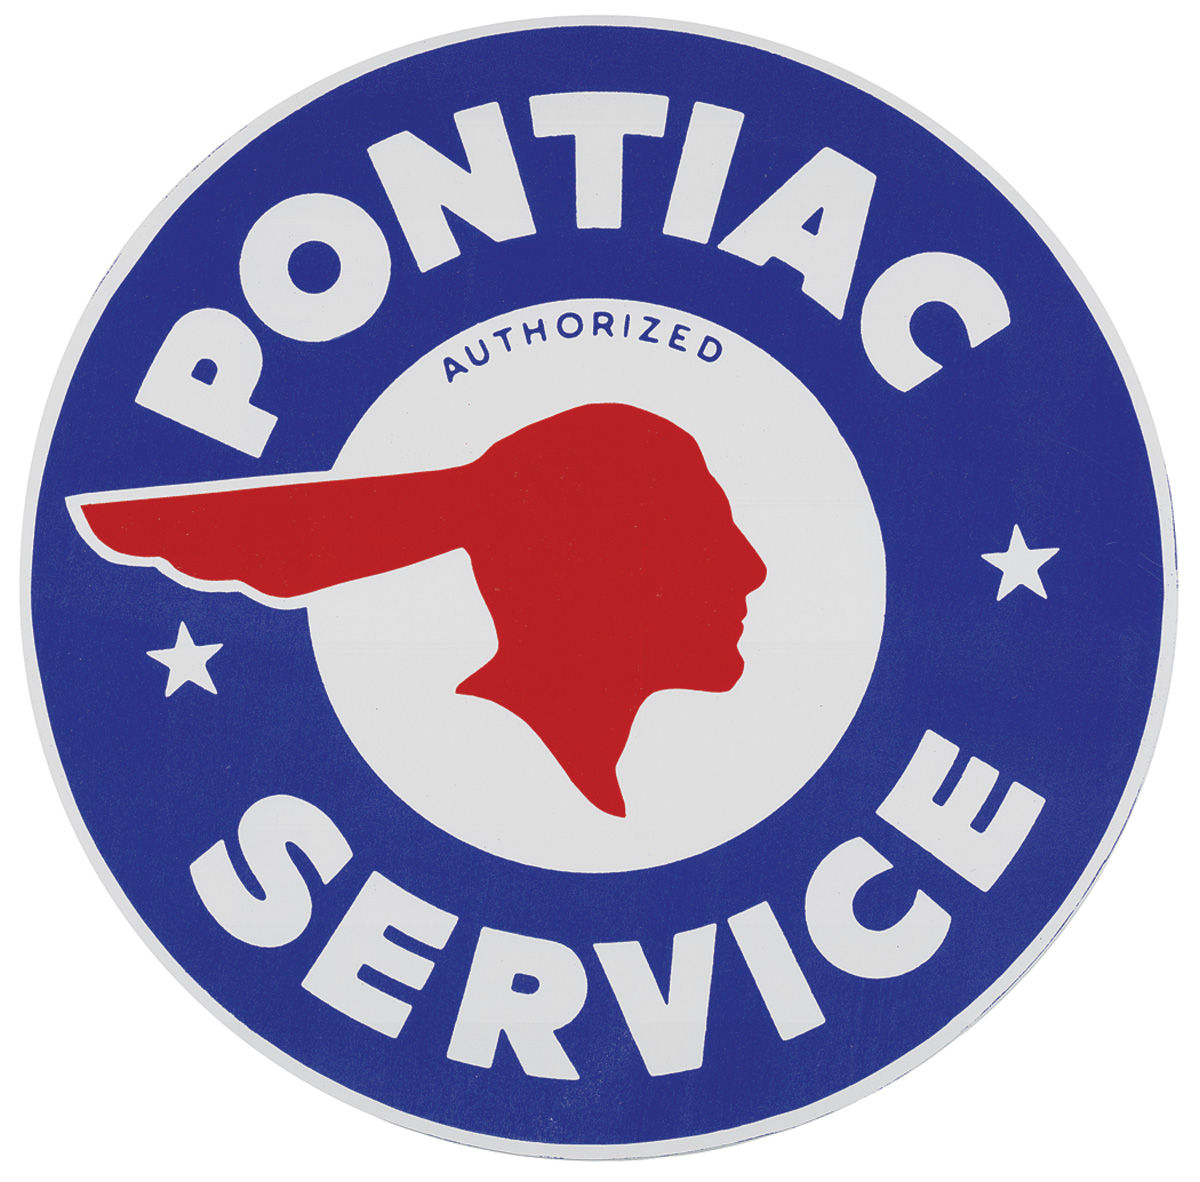 pontiac indian head logo